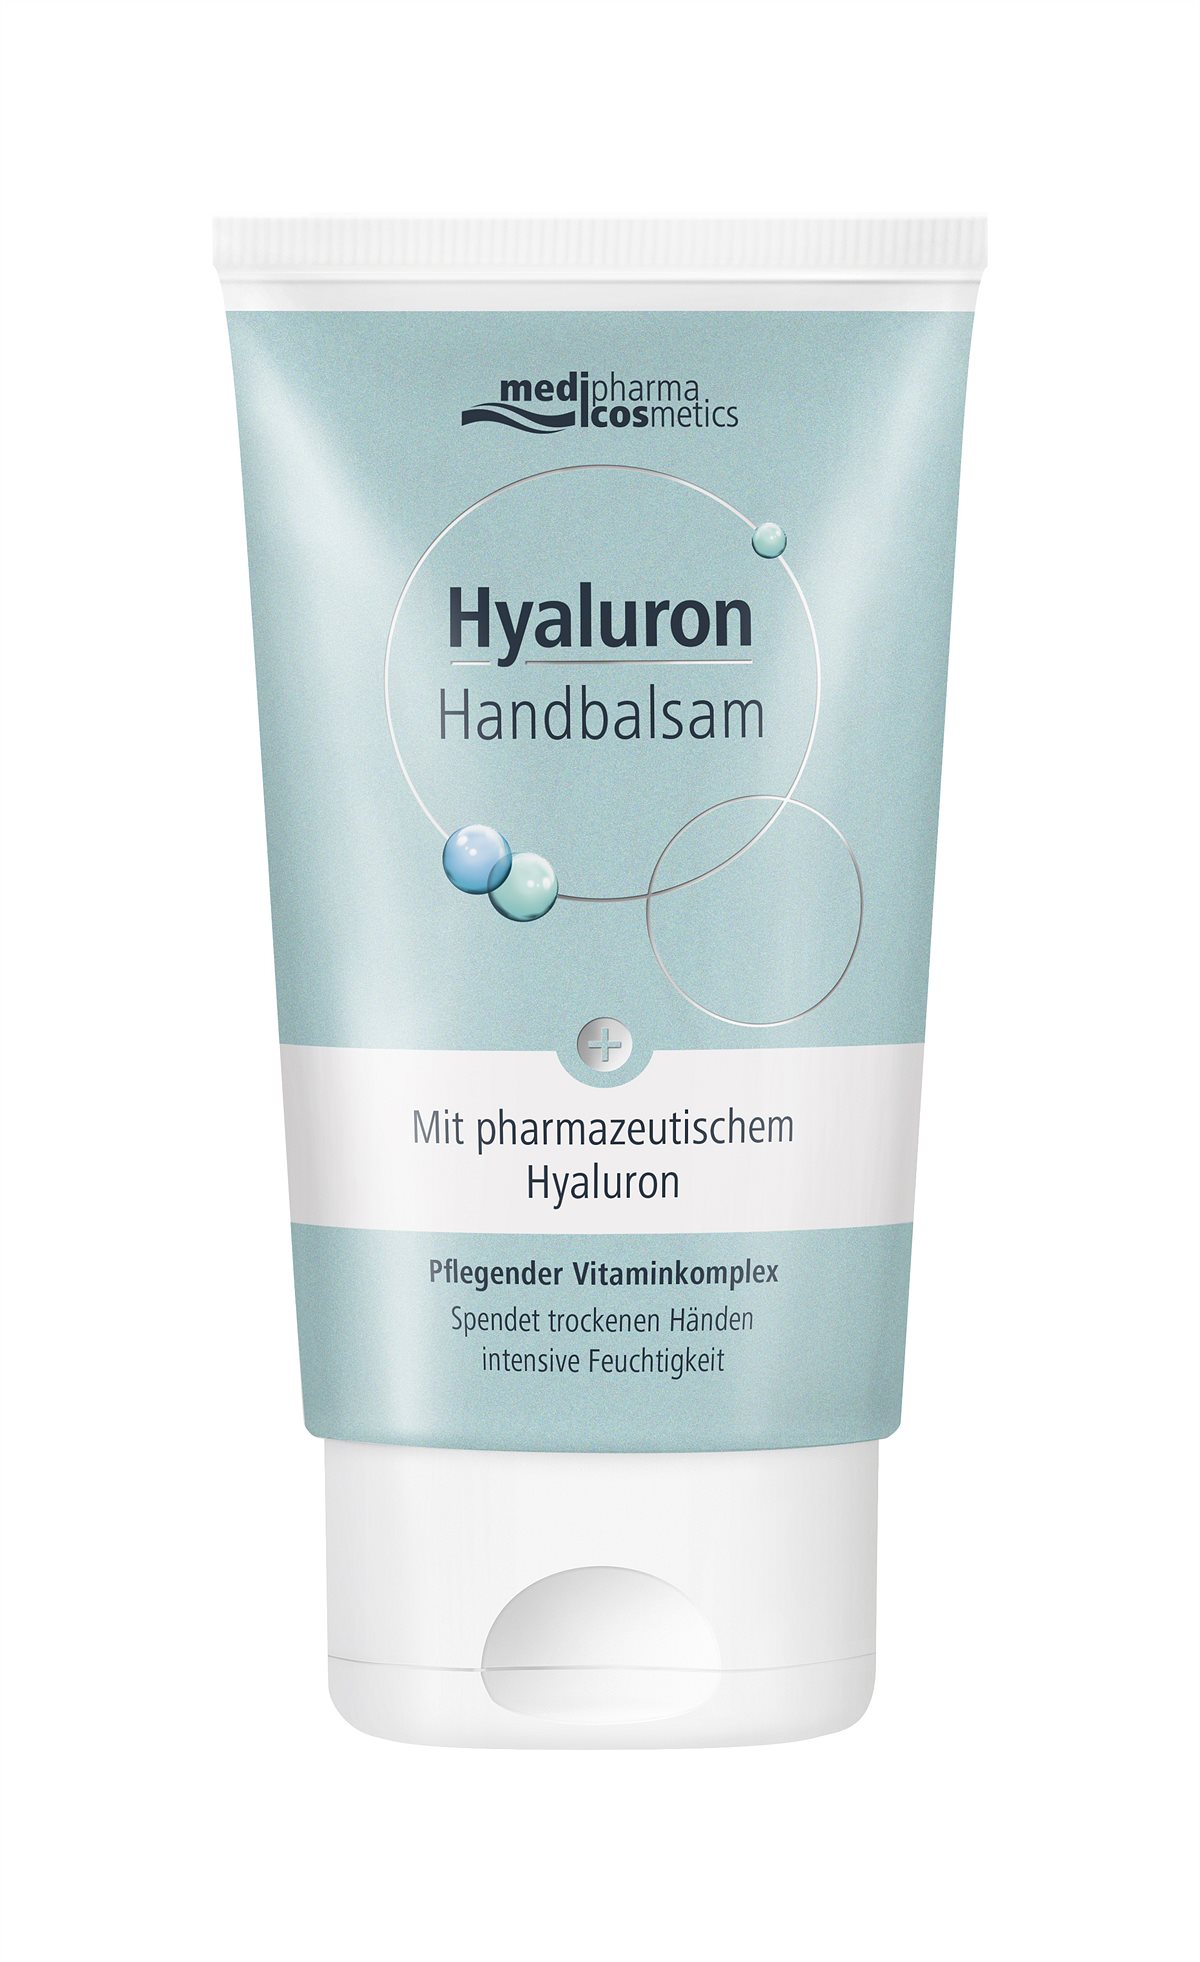 medipharma cosmetics Hyaluron Handbalsam 